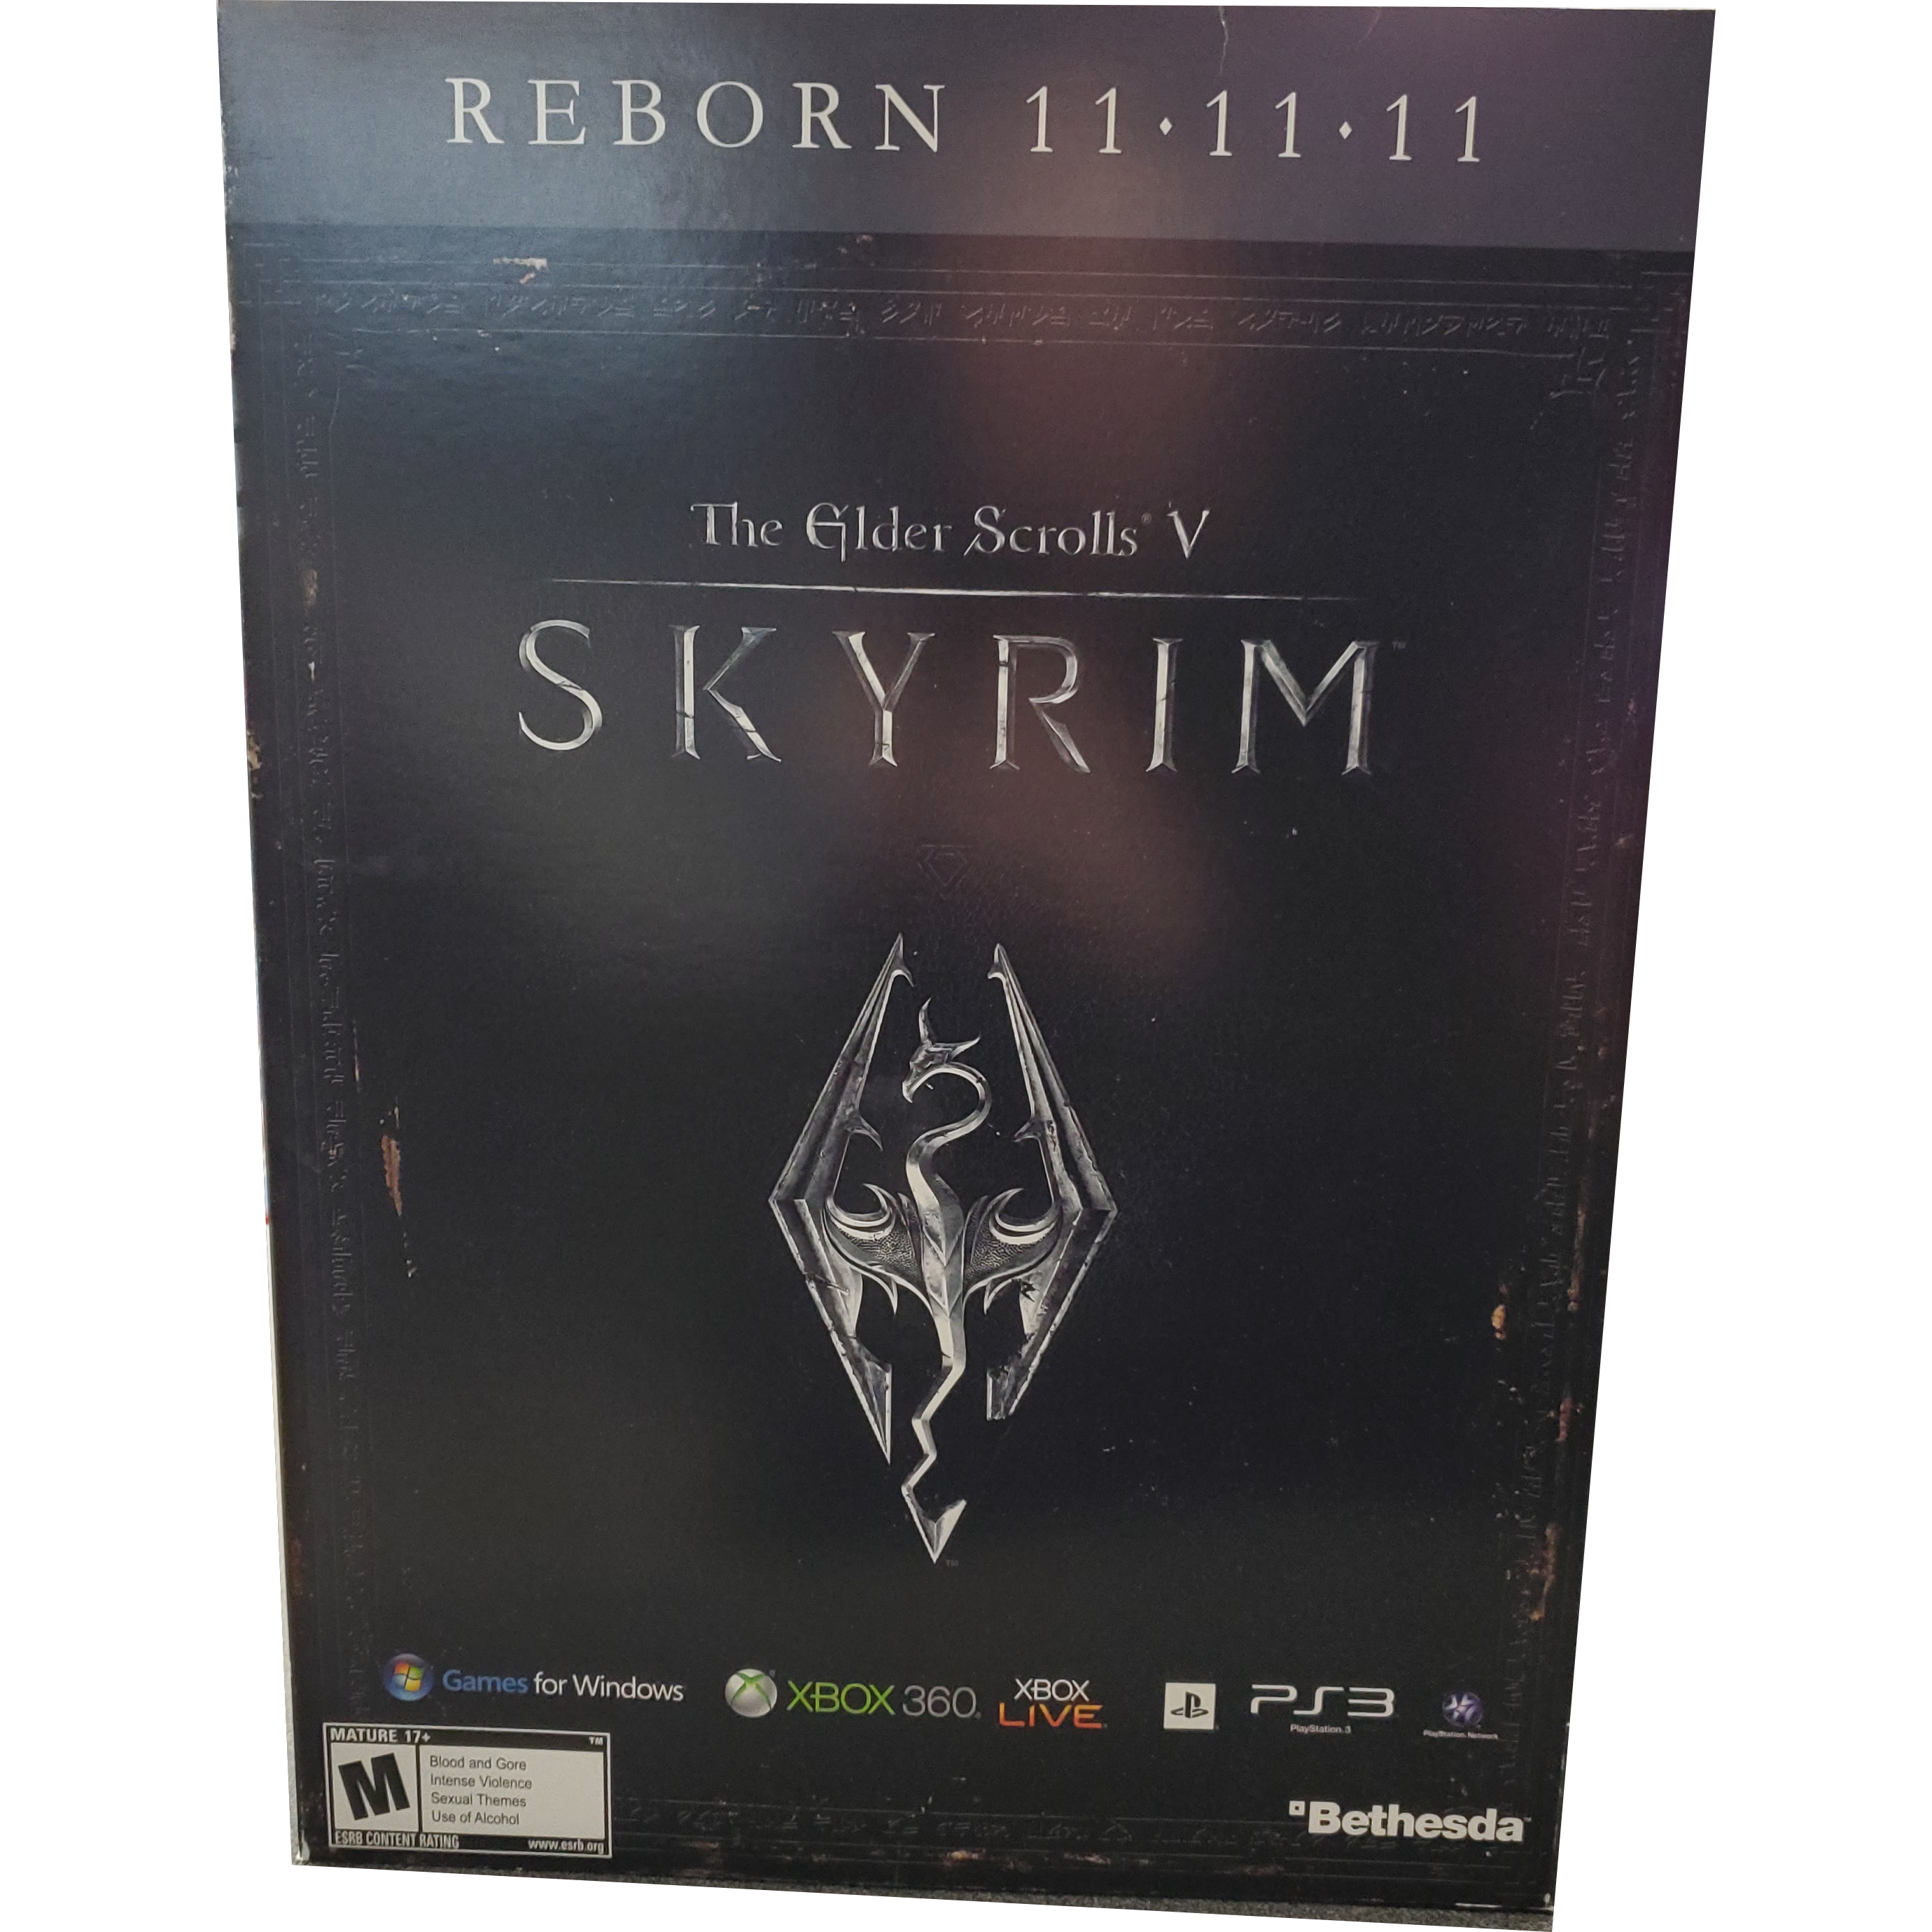 XBOX 360 - The Elder Scrolls V Skyrim Collector's Edition (Retail Big Box)